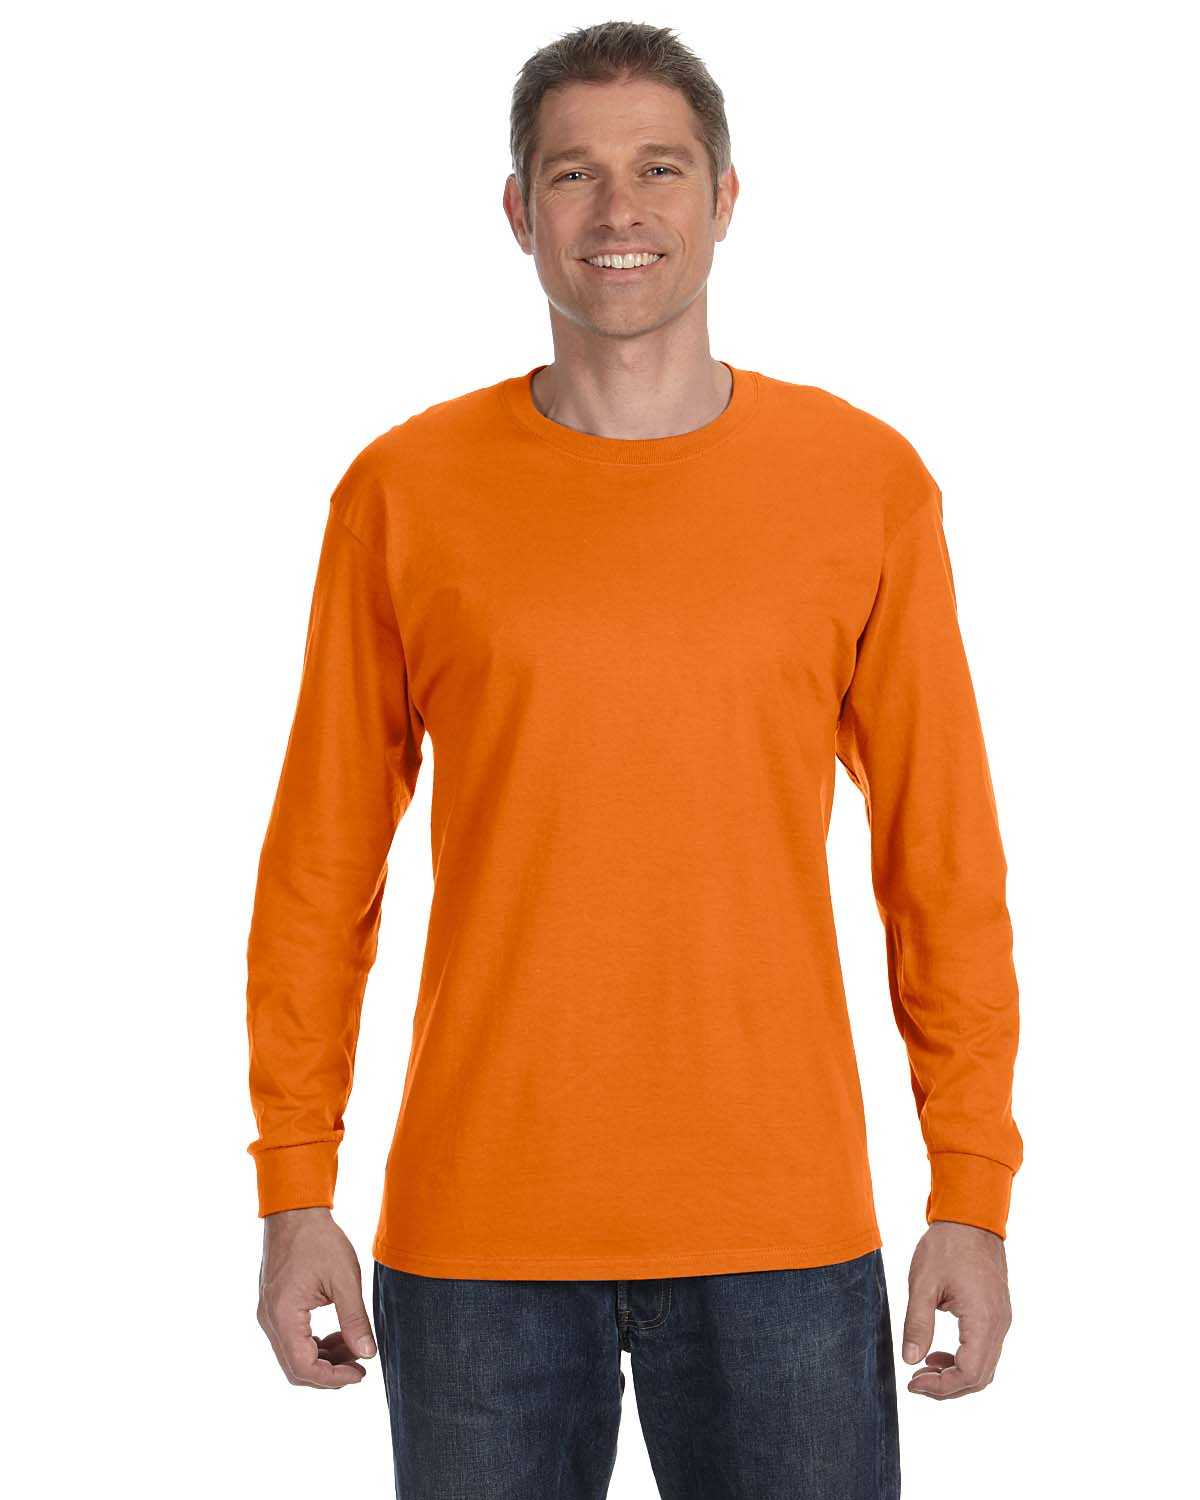 Hanes 5586 Adult 6.1 oz. Tagless Long-Sleeve T-Shirt | ApparelChoice.com